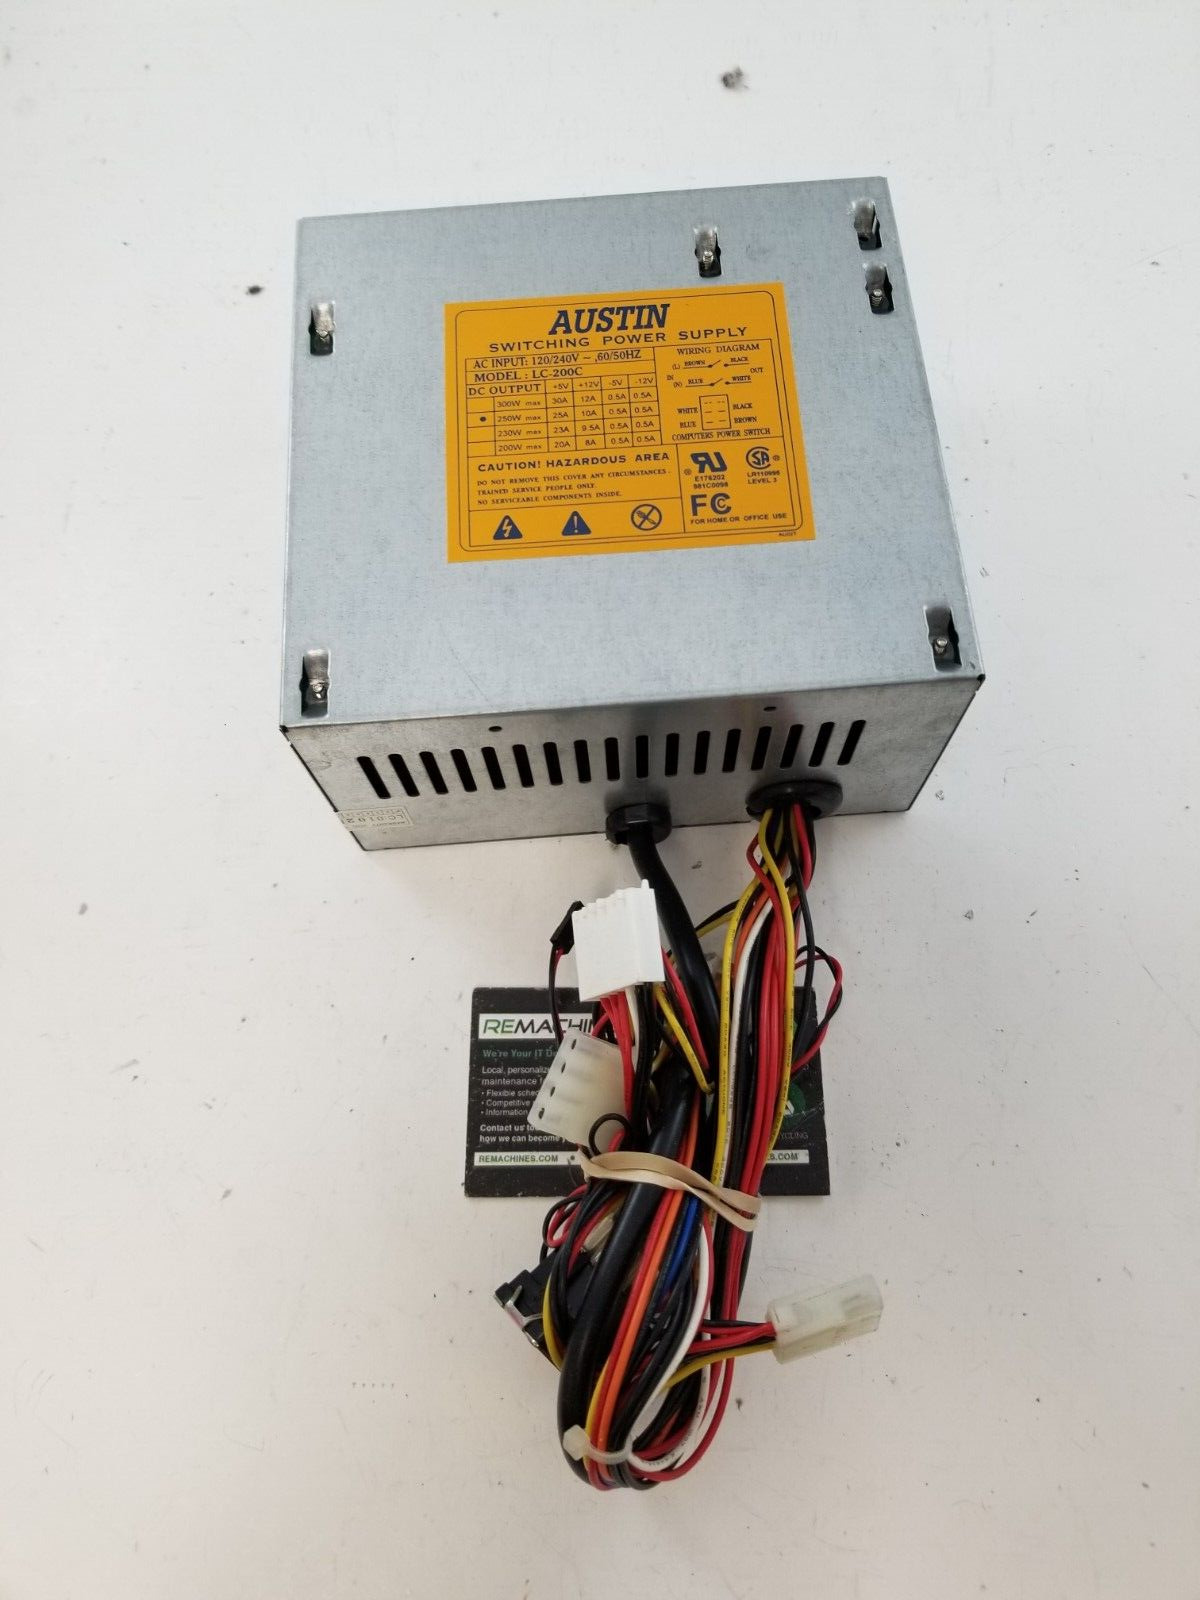 Austin Switching Power Supply LC-200C 250W AT Desktop PSU TESTED FS